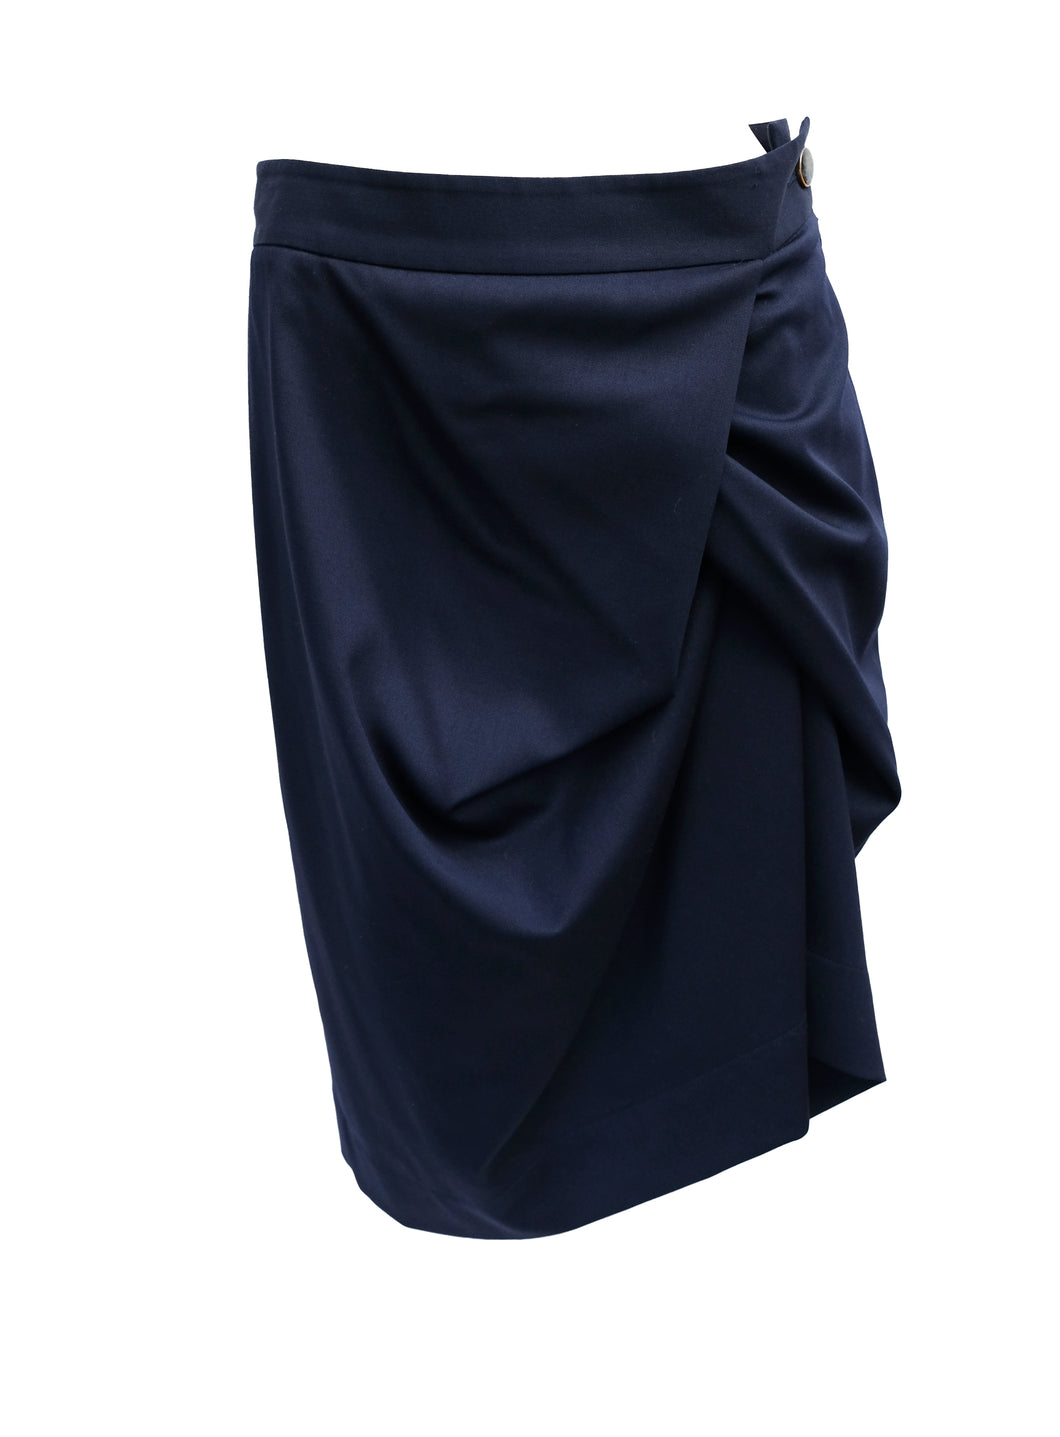 Vivienne Westwood Tailored Navy Tulip Skirt, UK10-12